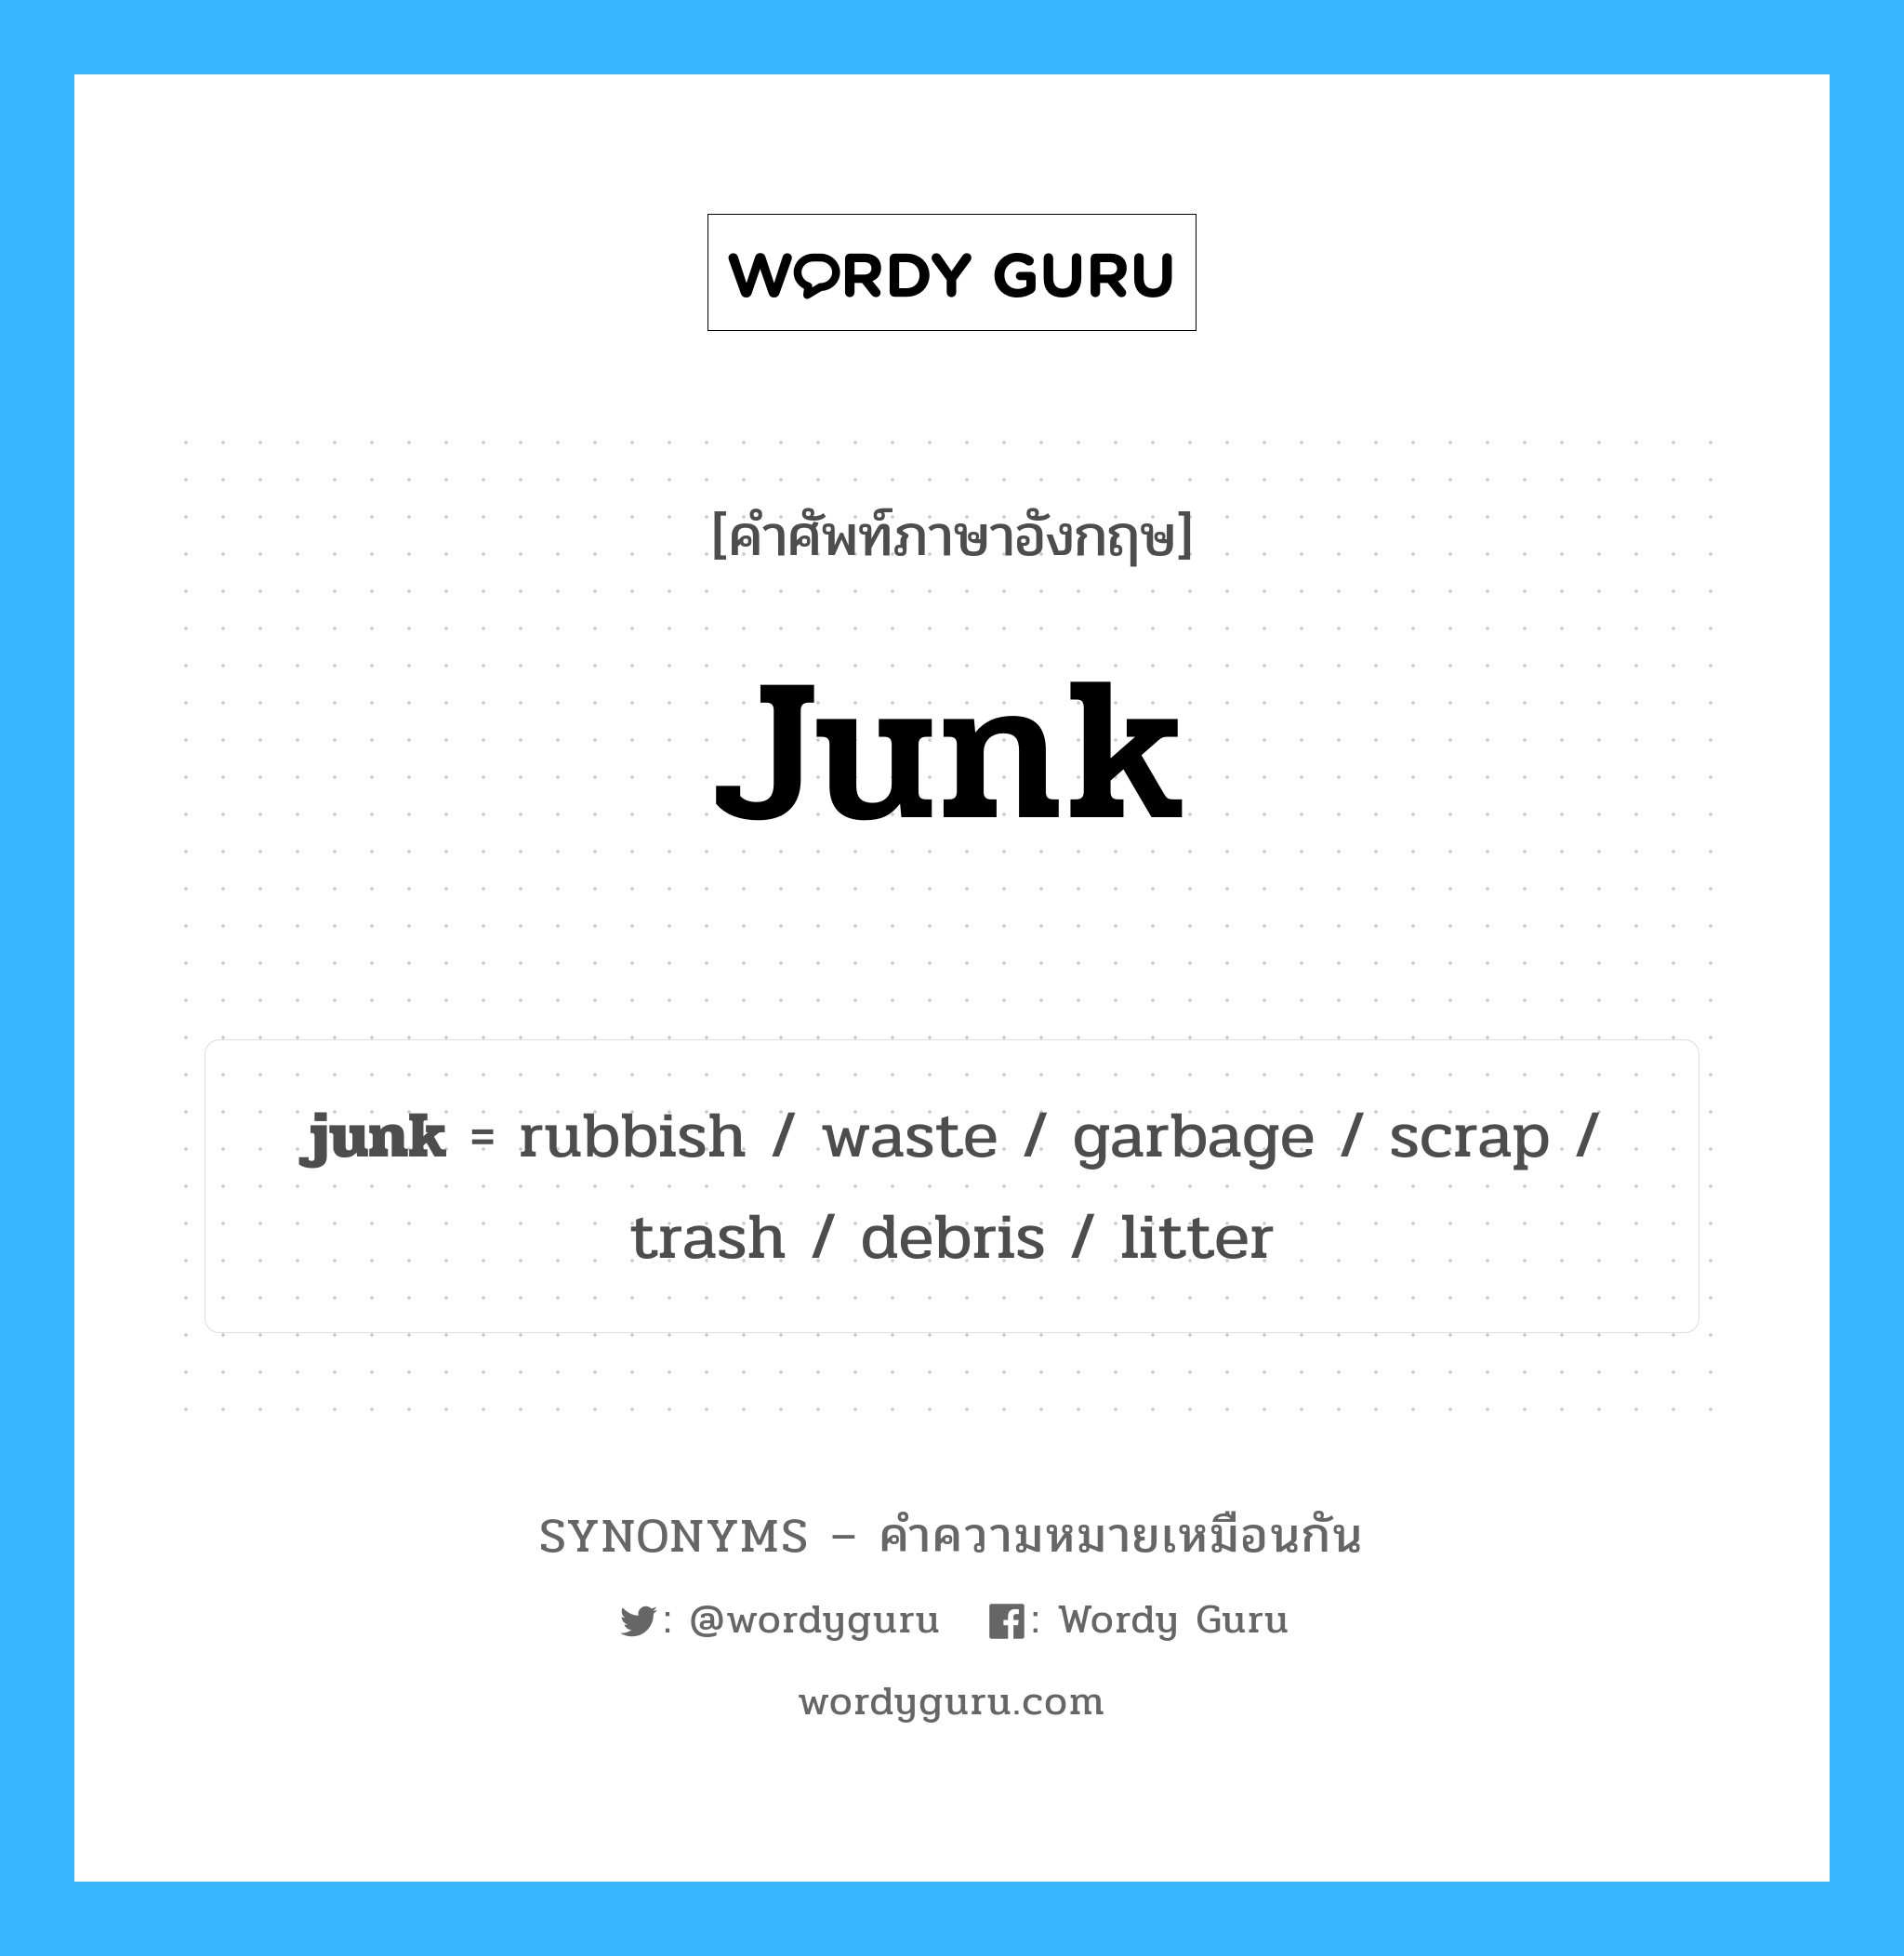 waste เป็นหนึ่งใน junk และมีคำอื่น ๆ อีกดังนี้, คำศัพท์ภาษาอังกฤษ waste ความหมายคล้ายกันกับ junk แปลว่า เสีย หมวด junk